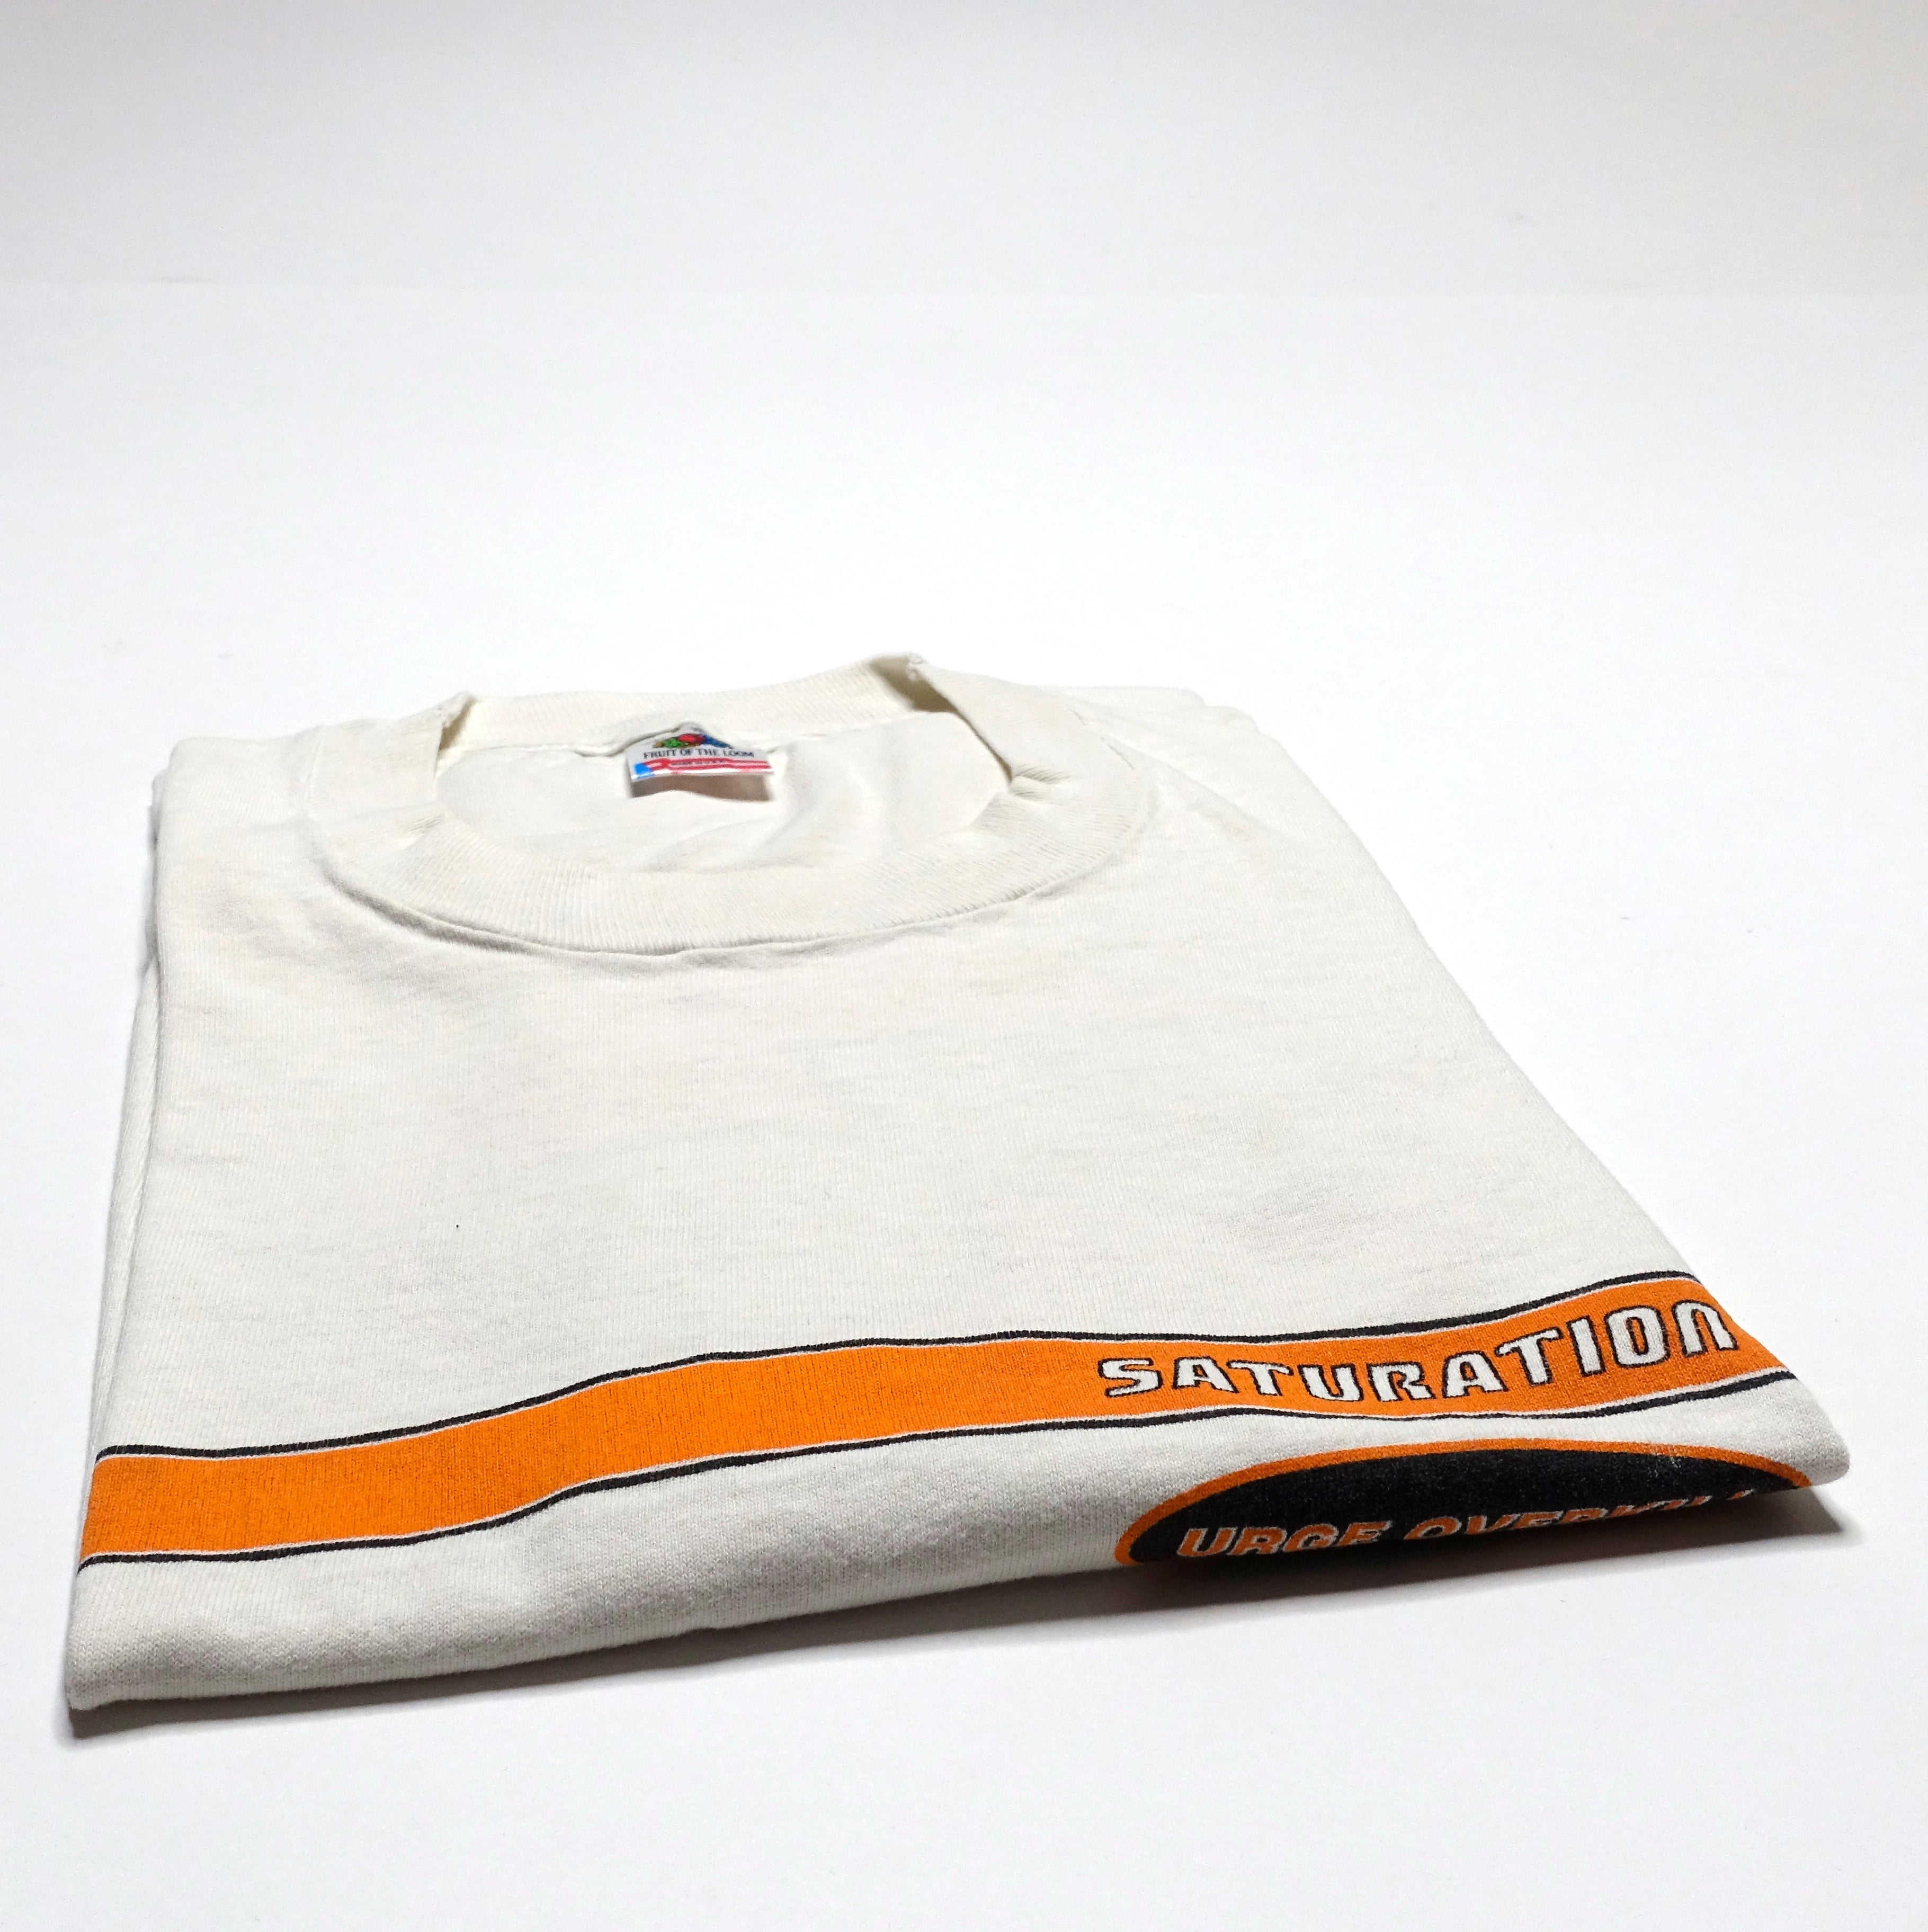 Urge Overkill - Saturation 1993 Tour Shirt Size XL